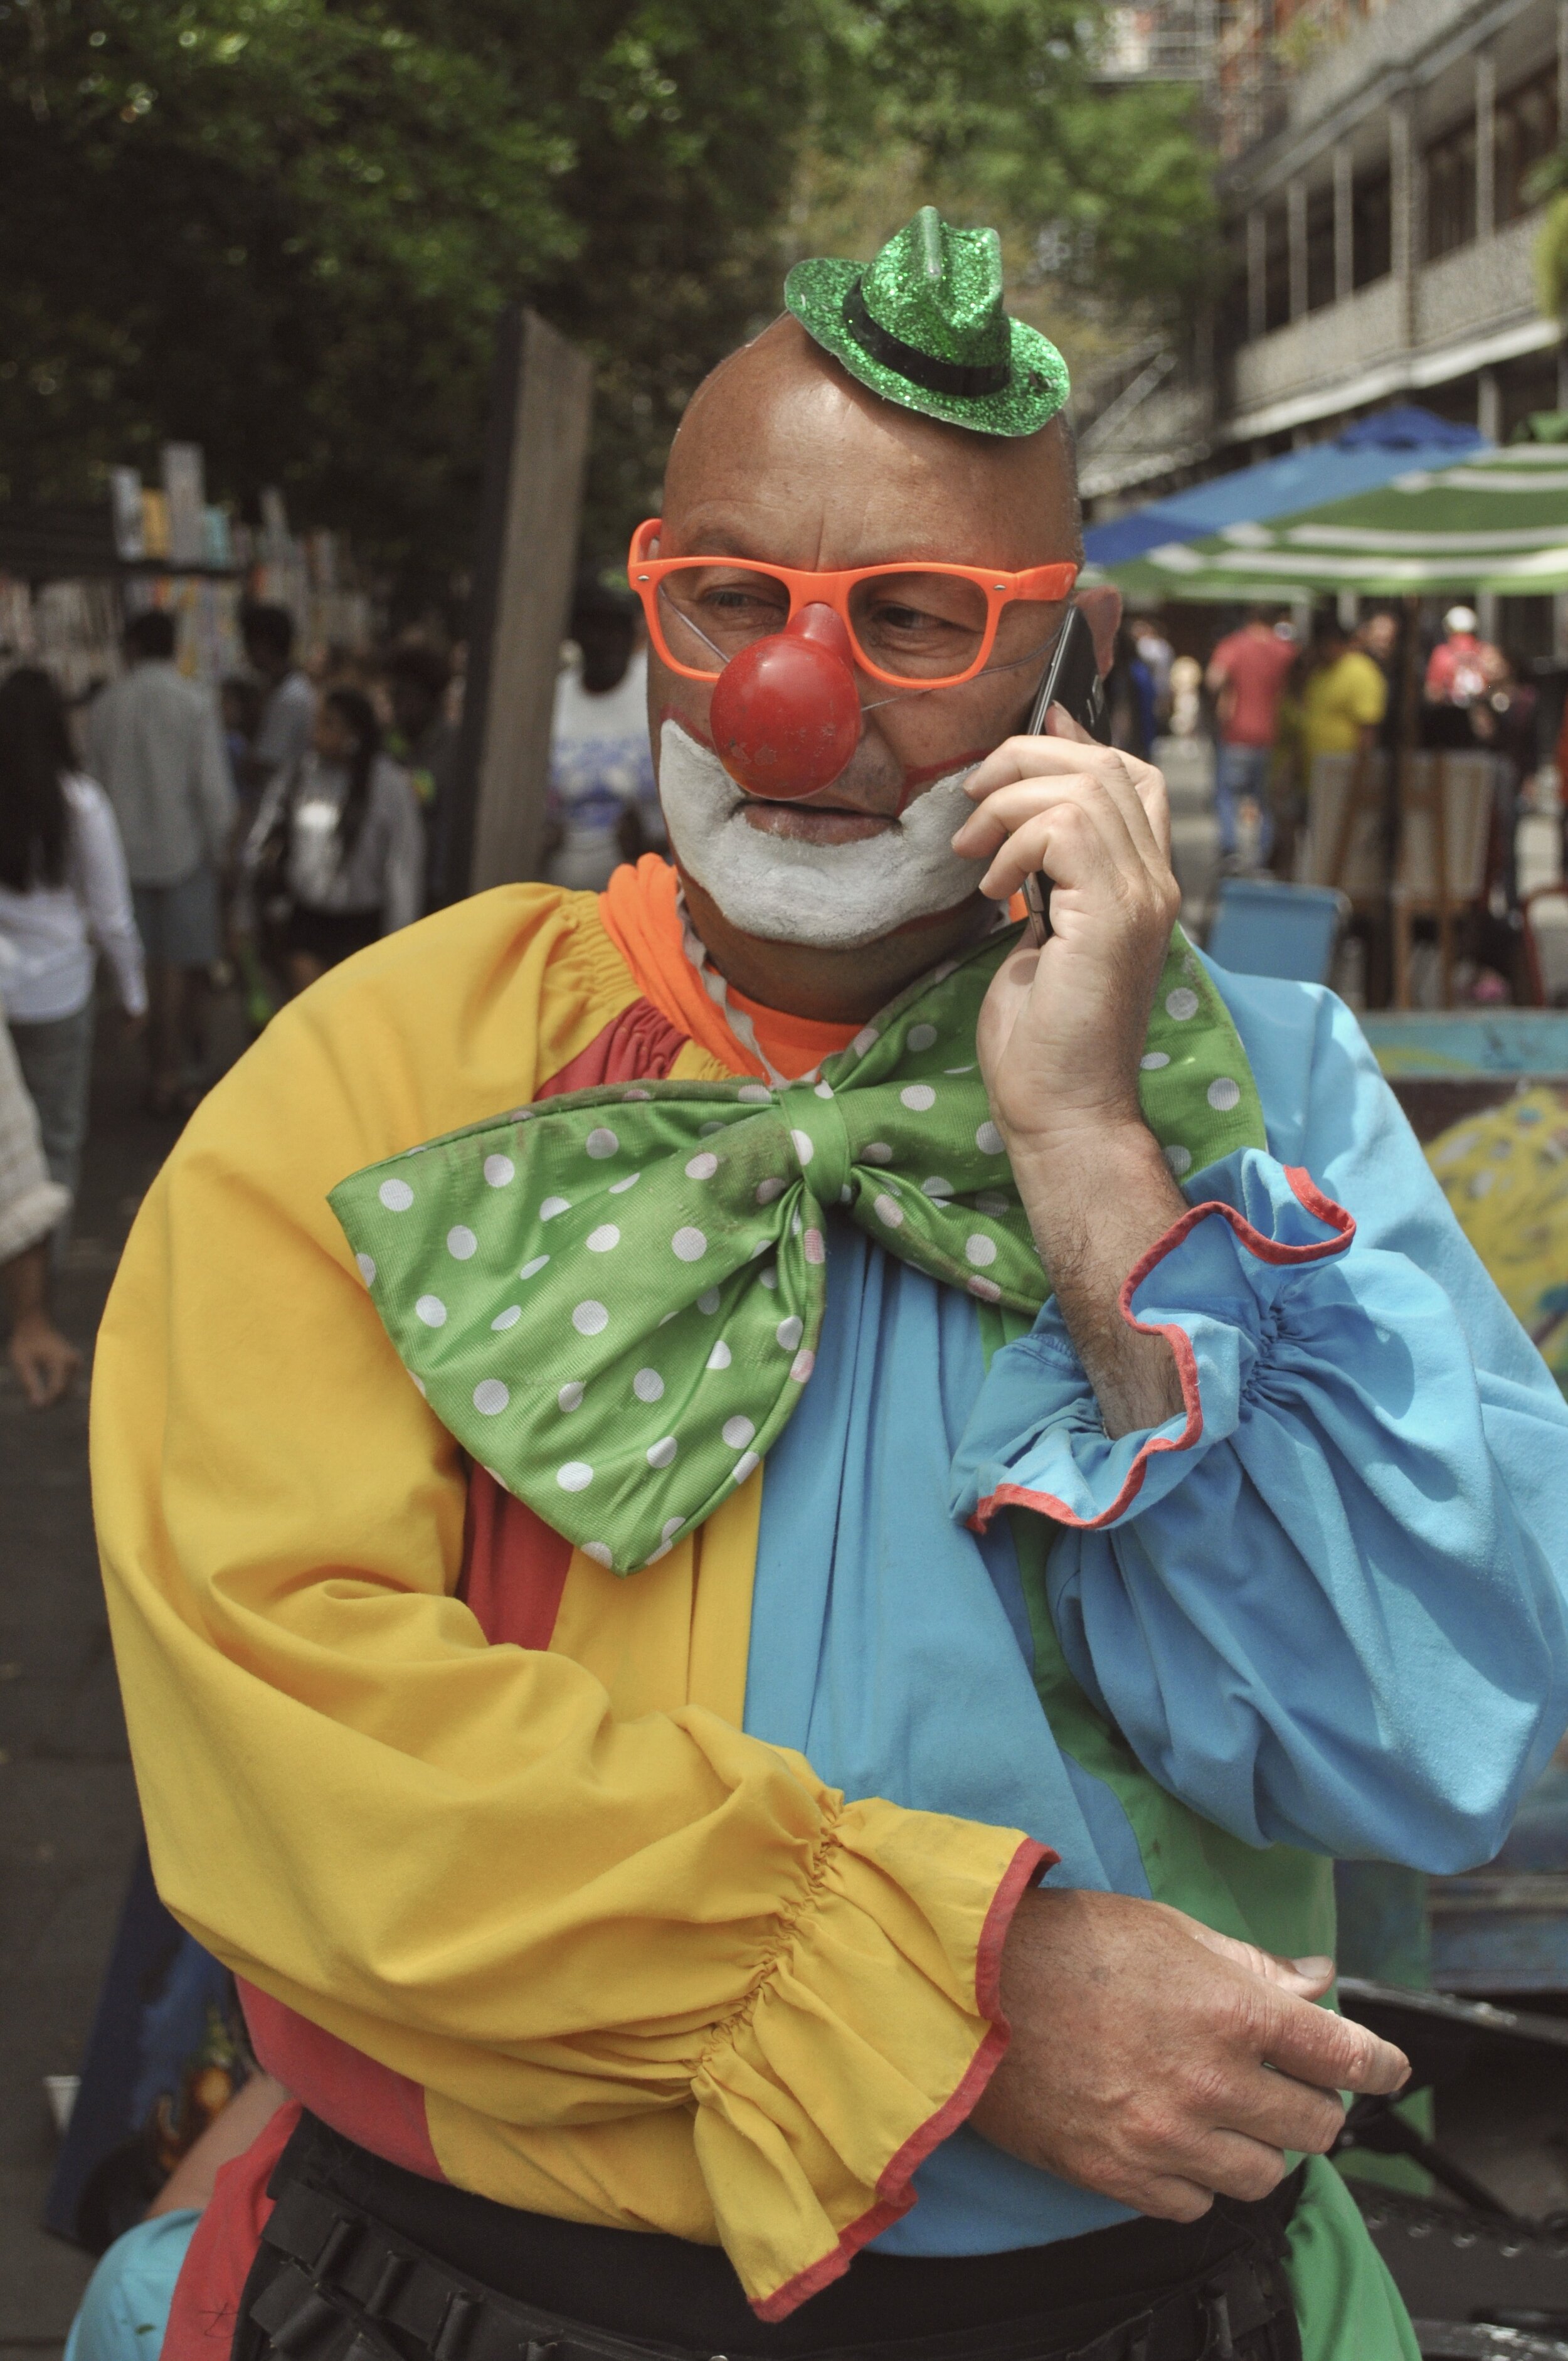 Clown On The Phone - New Orleans, Louisiana (2015)